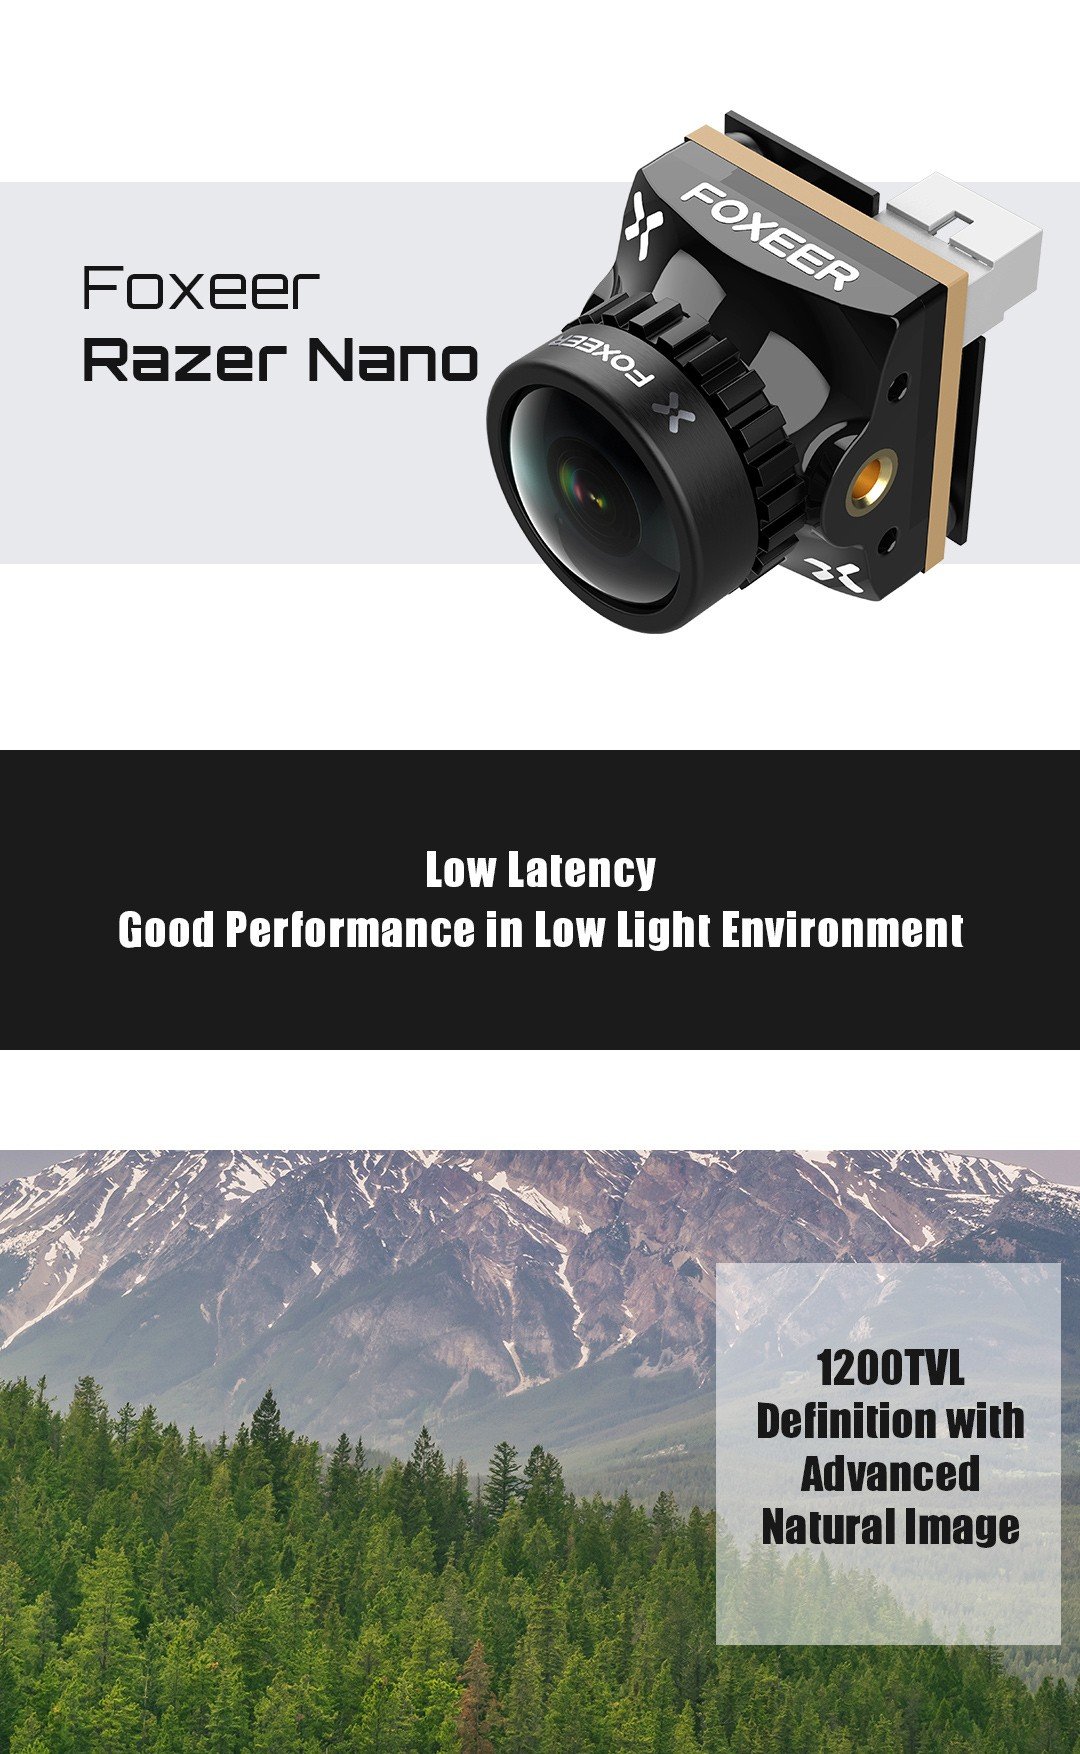 Foxeer 1200TVL Razer Nano Low Latency FPV Camera infographic 1